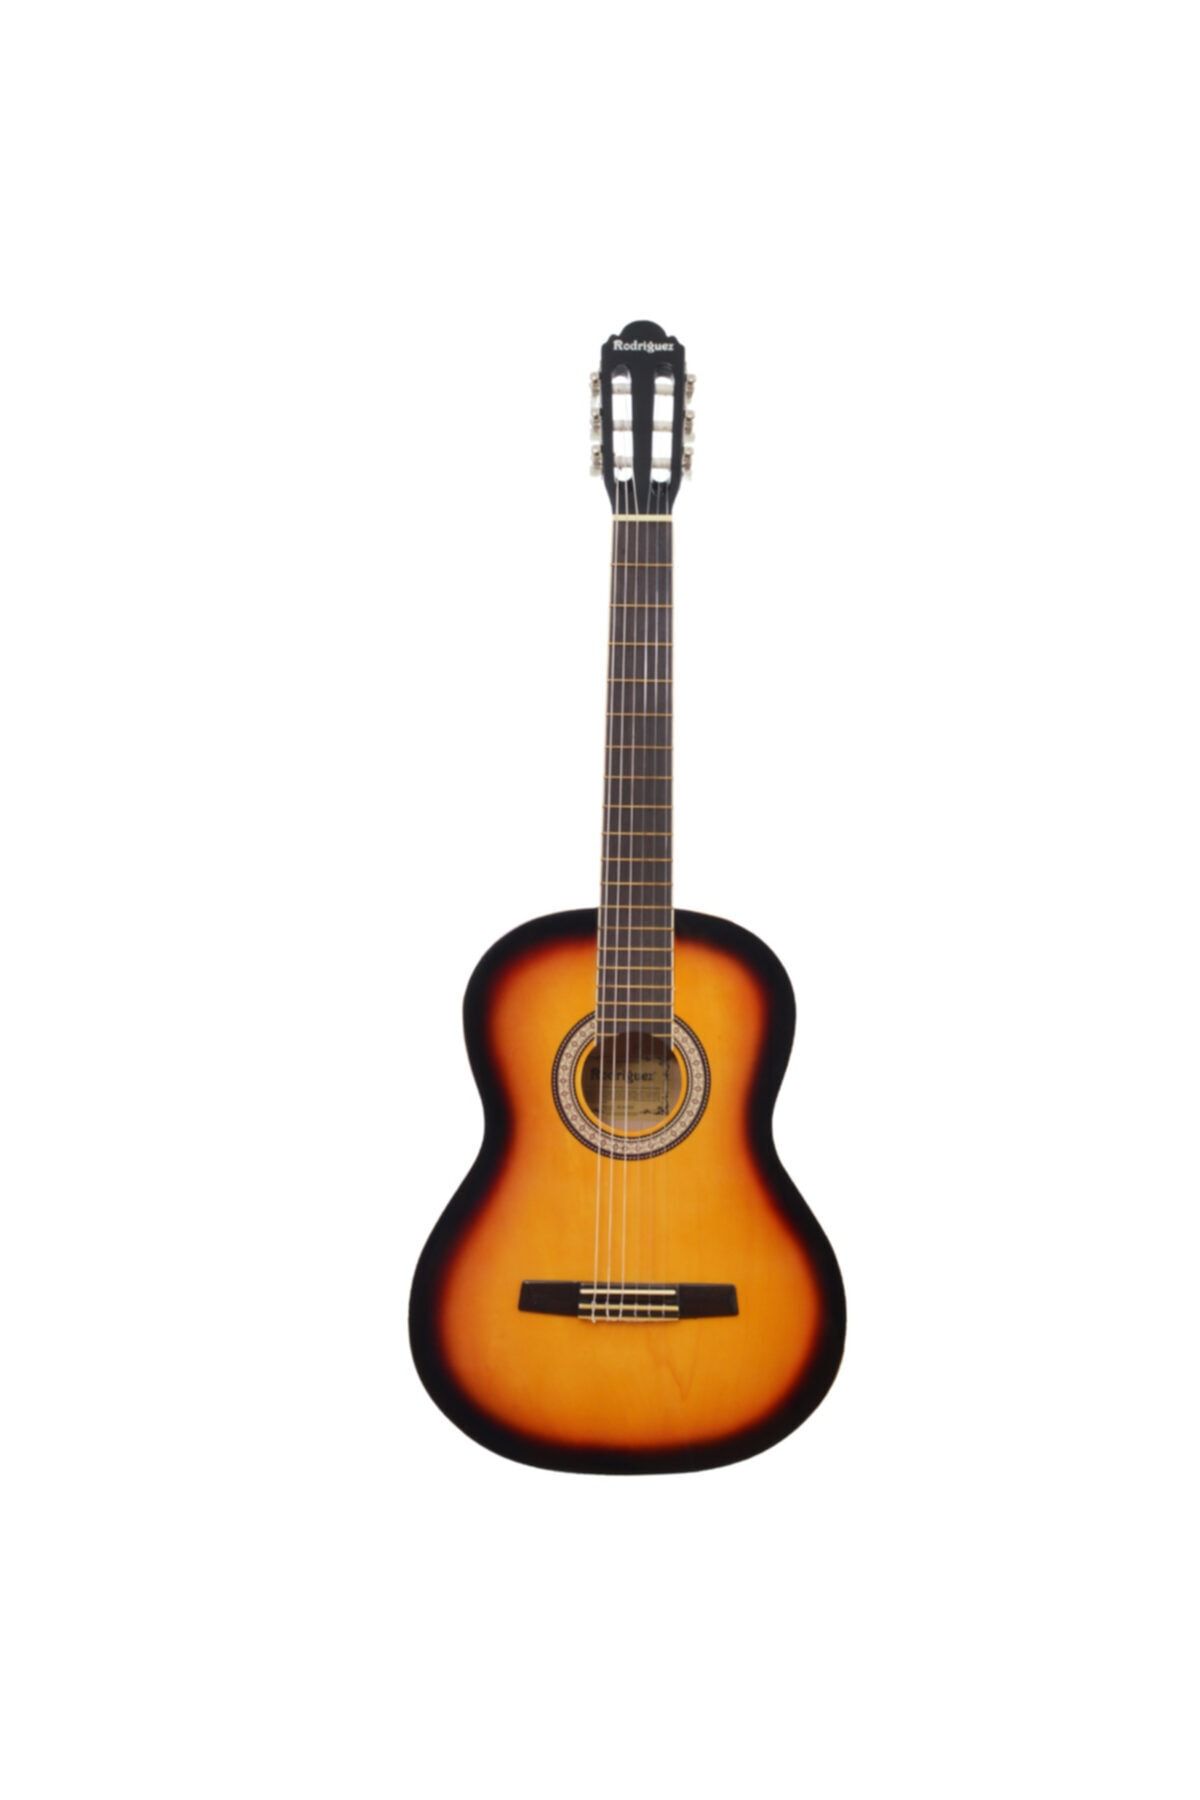 Rodriguez Gitar Klasik Rc465sb